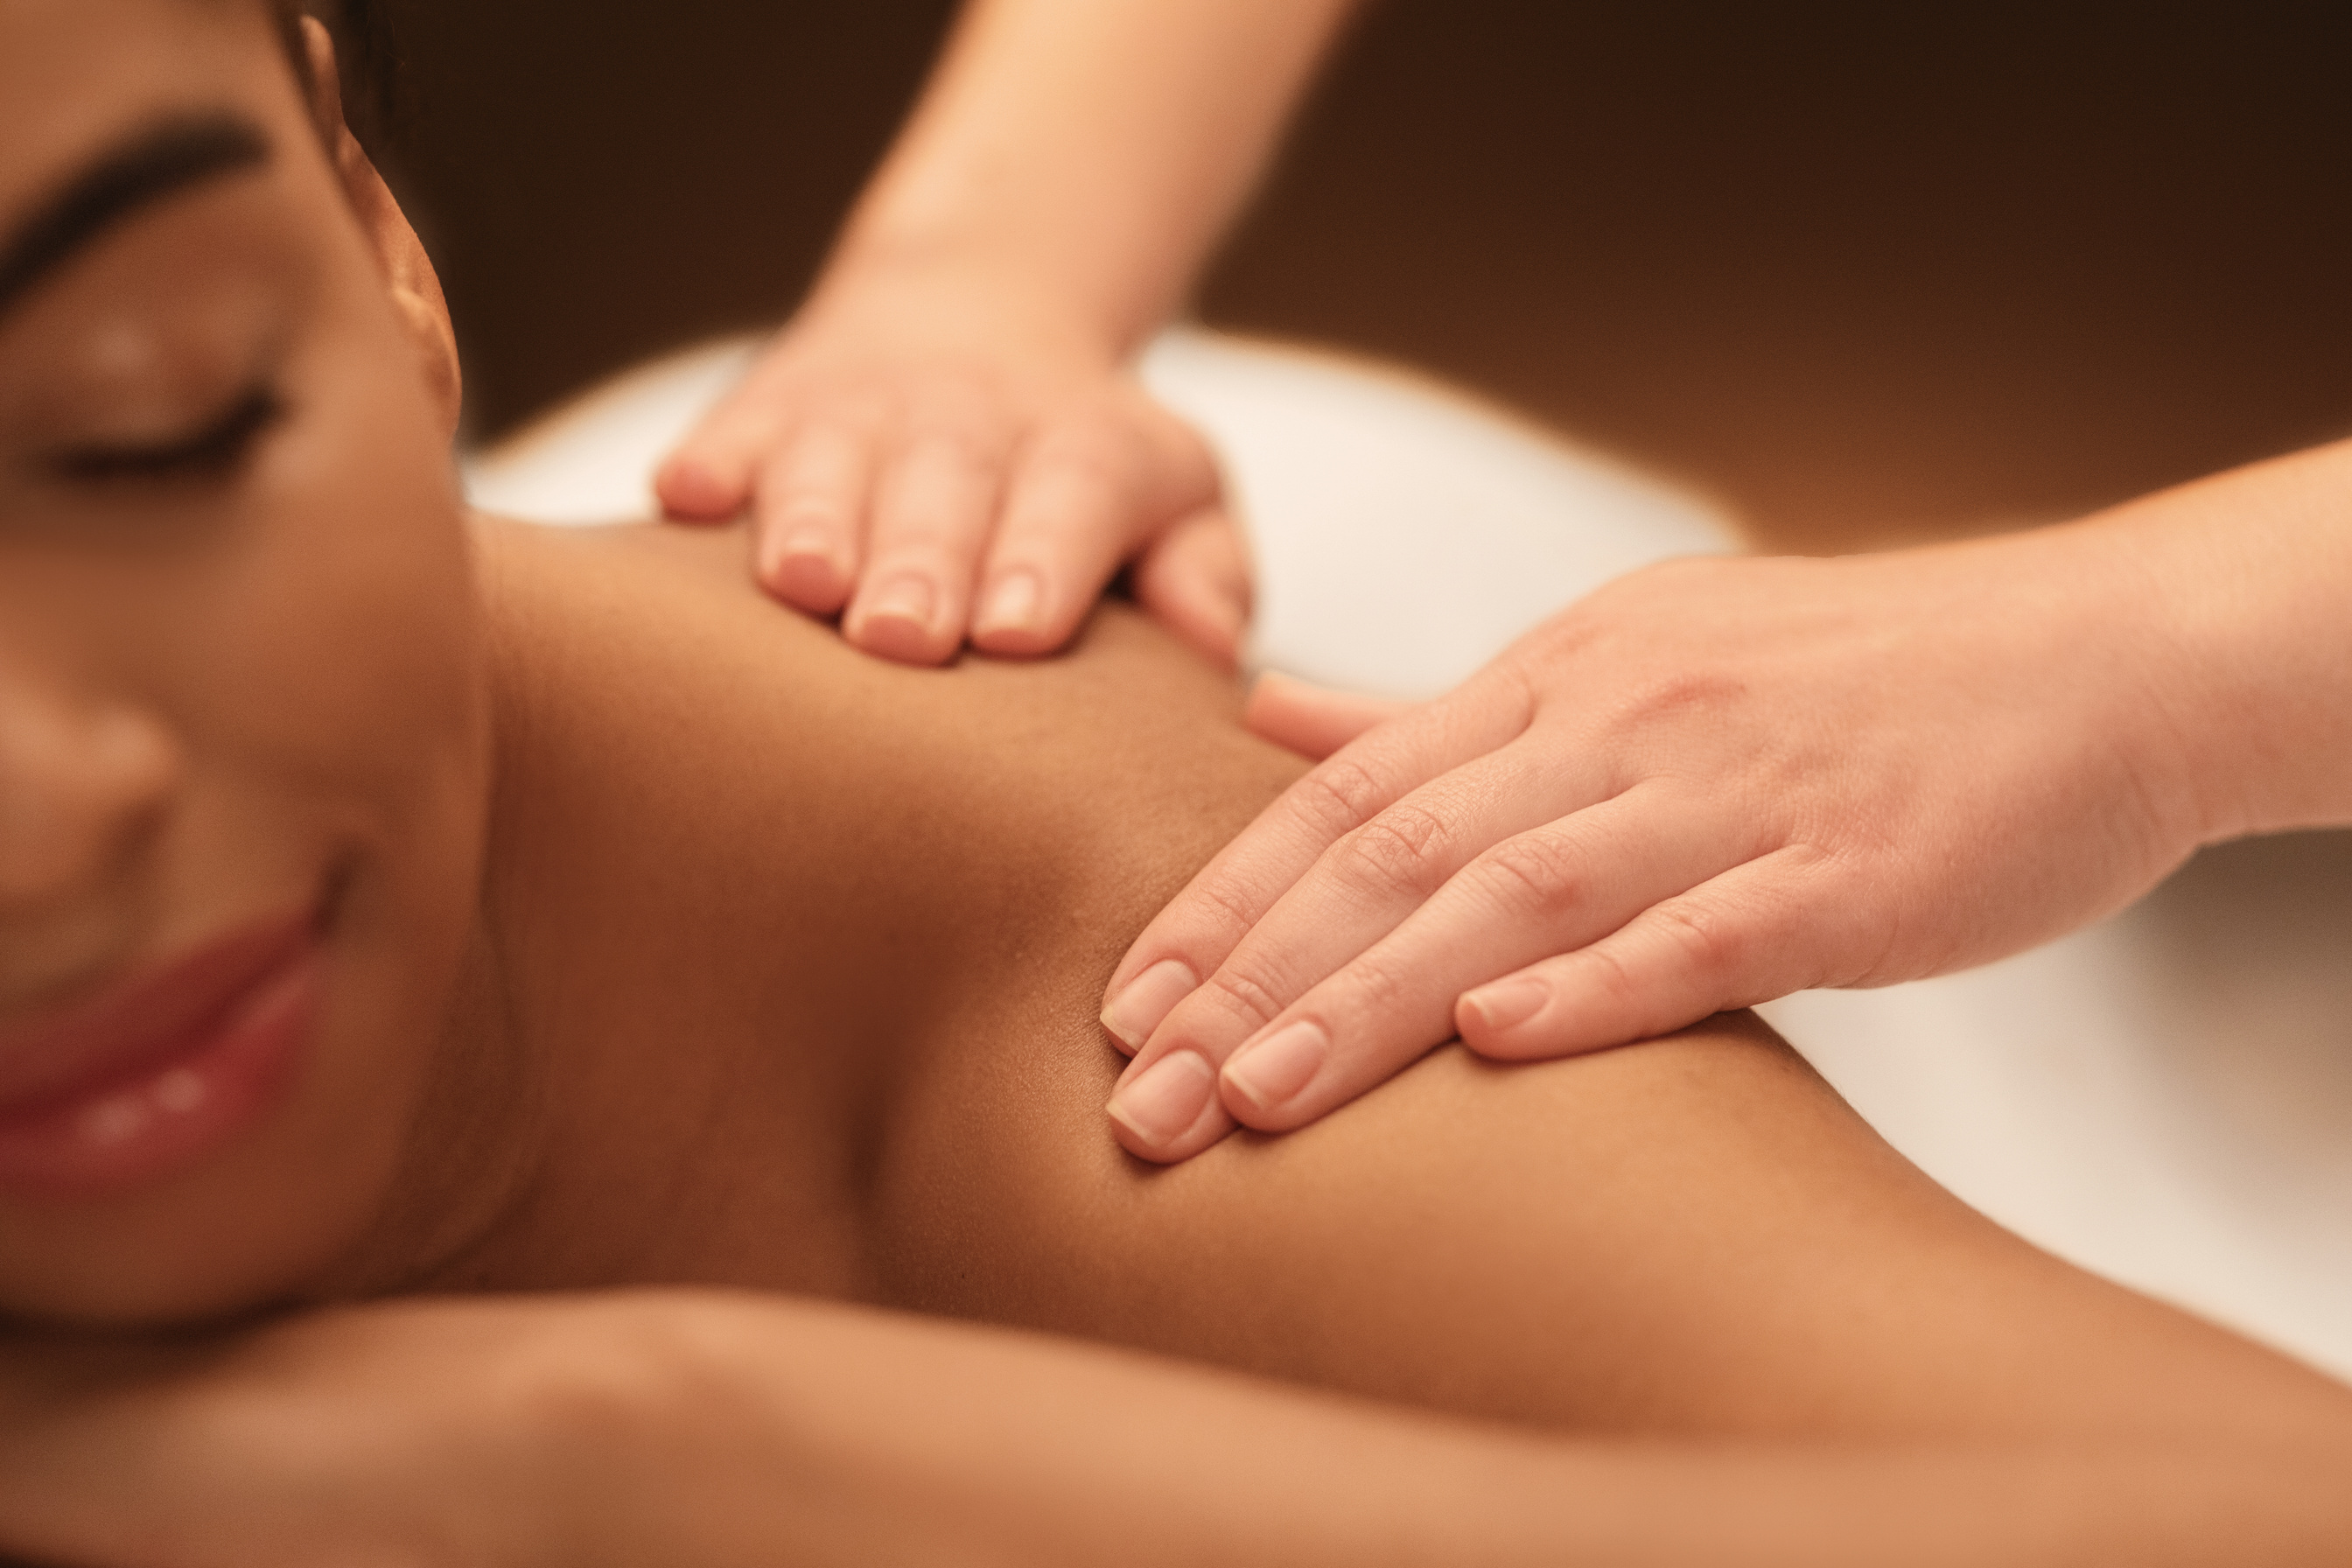 Masseuse hands massaging african woman shoulders, relaxing body massage